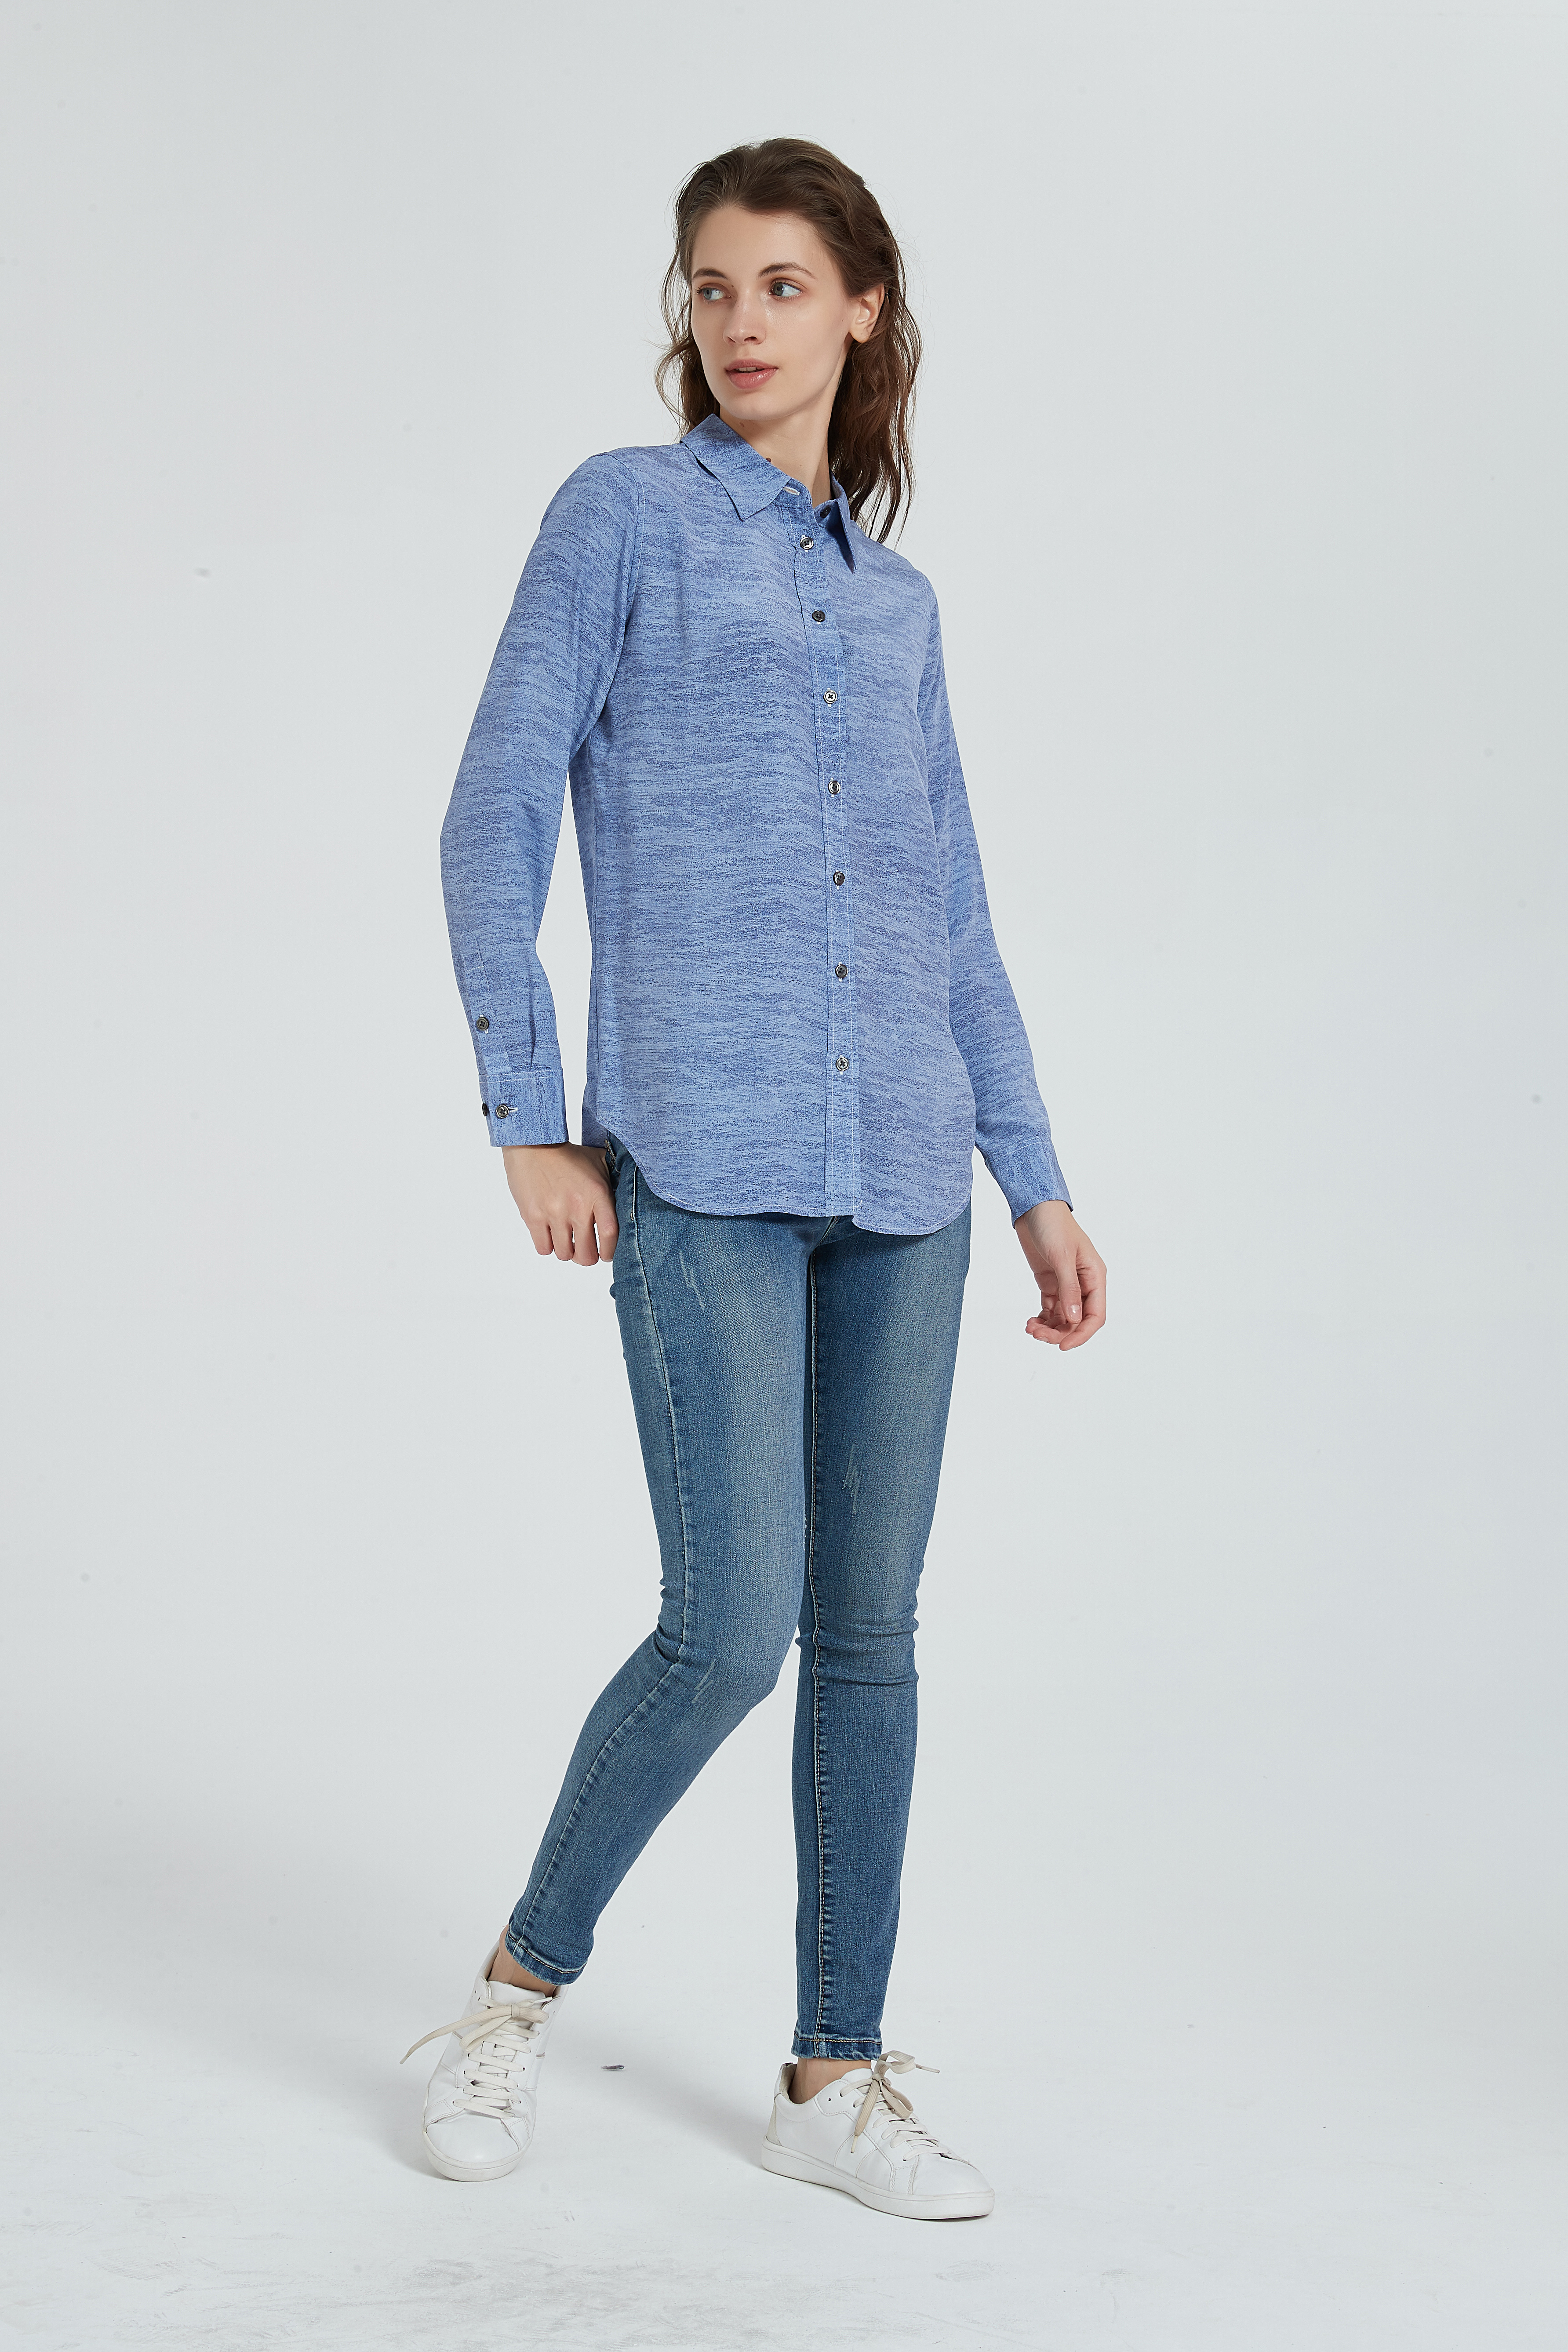 Women's 100% Silk Long Sleeve Blouse, Blue Underpainting Cloud Print.